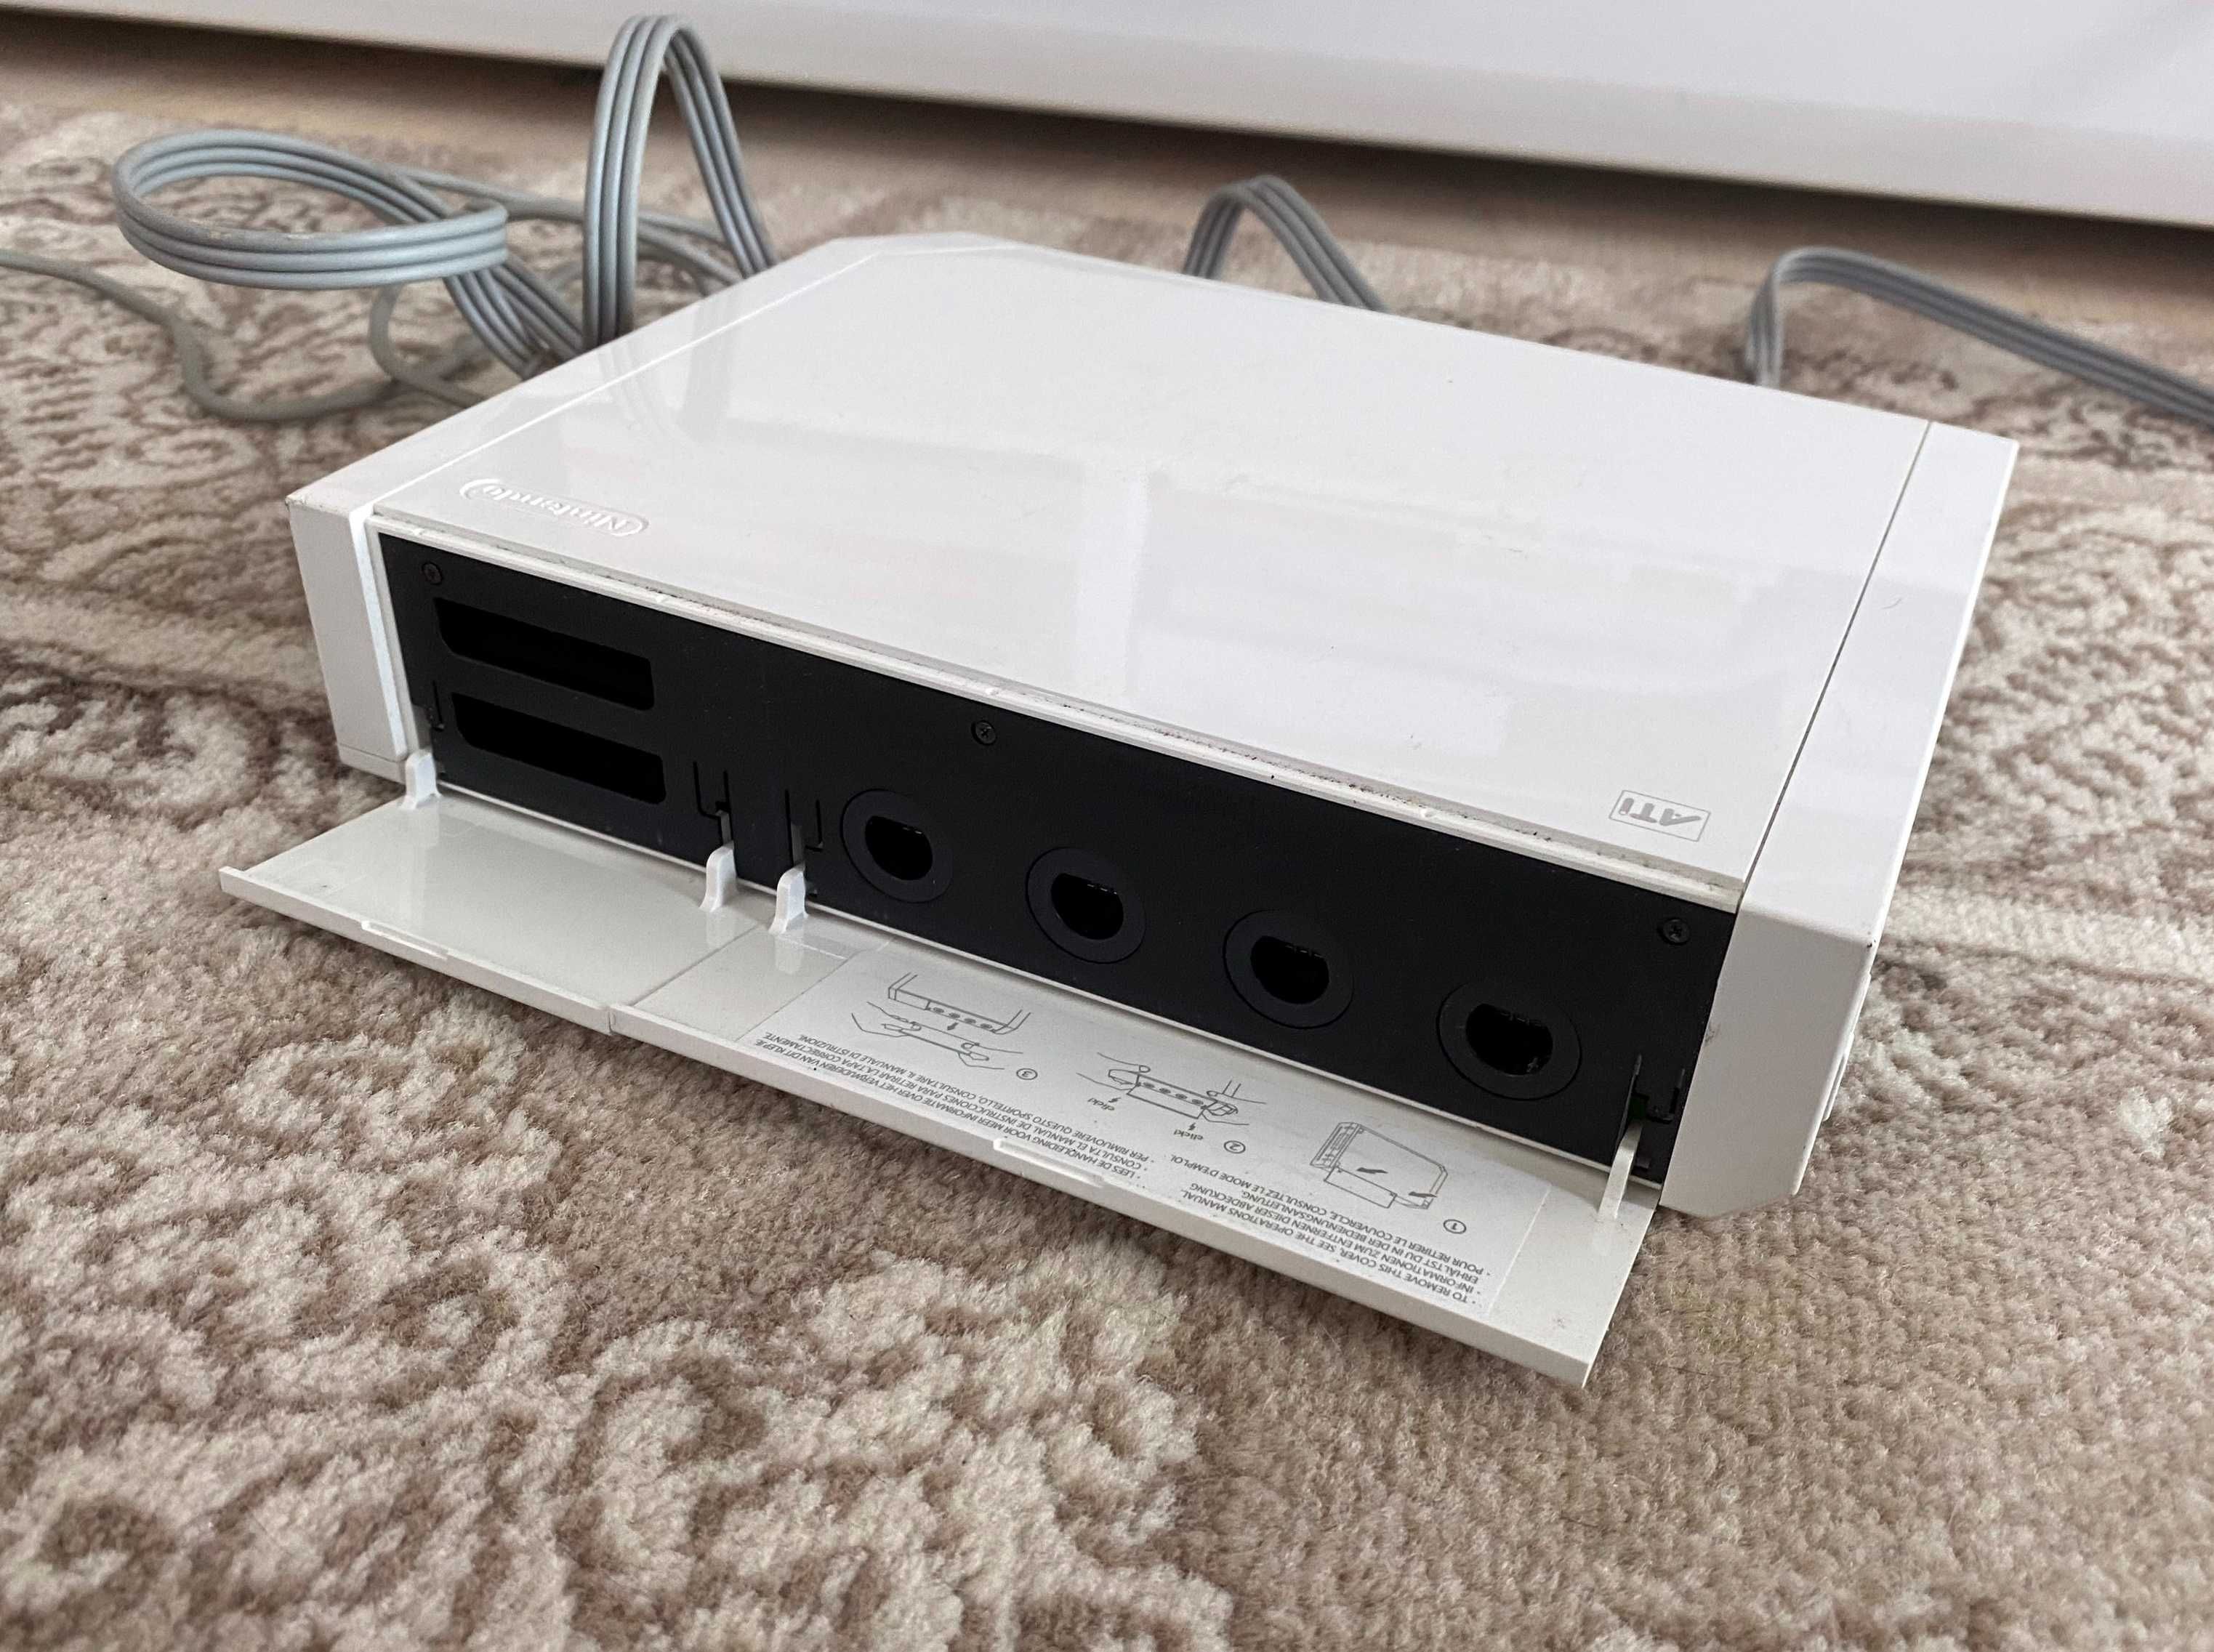 Consola Nintendo Wii alba - fara accesorii  - perfect functionala